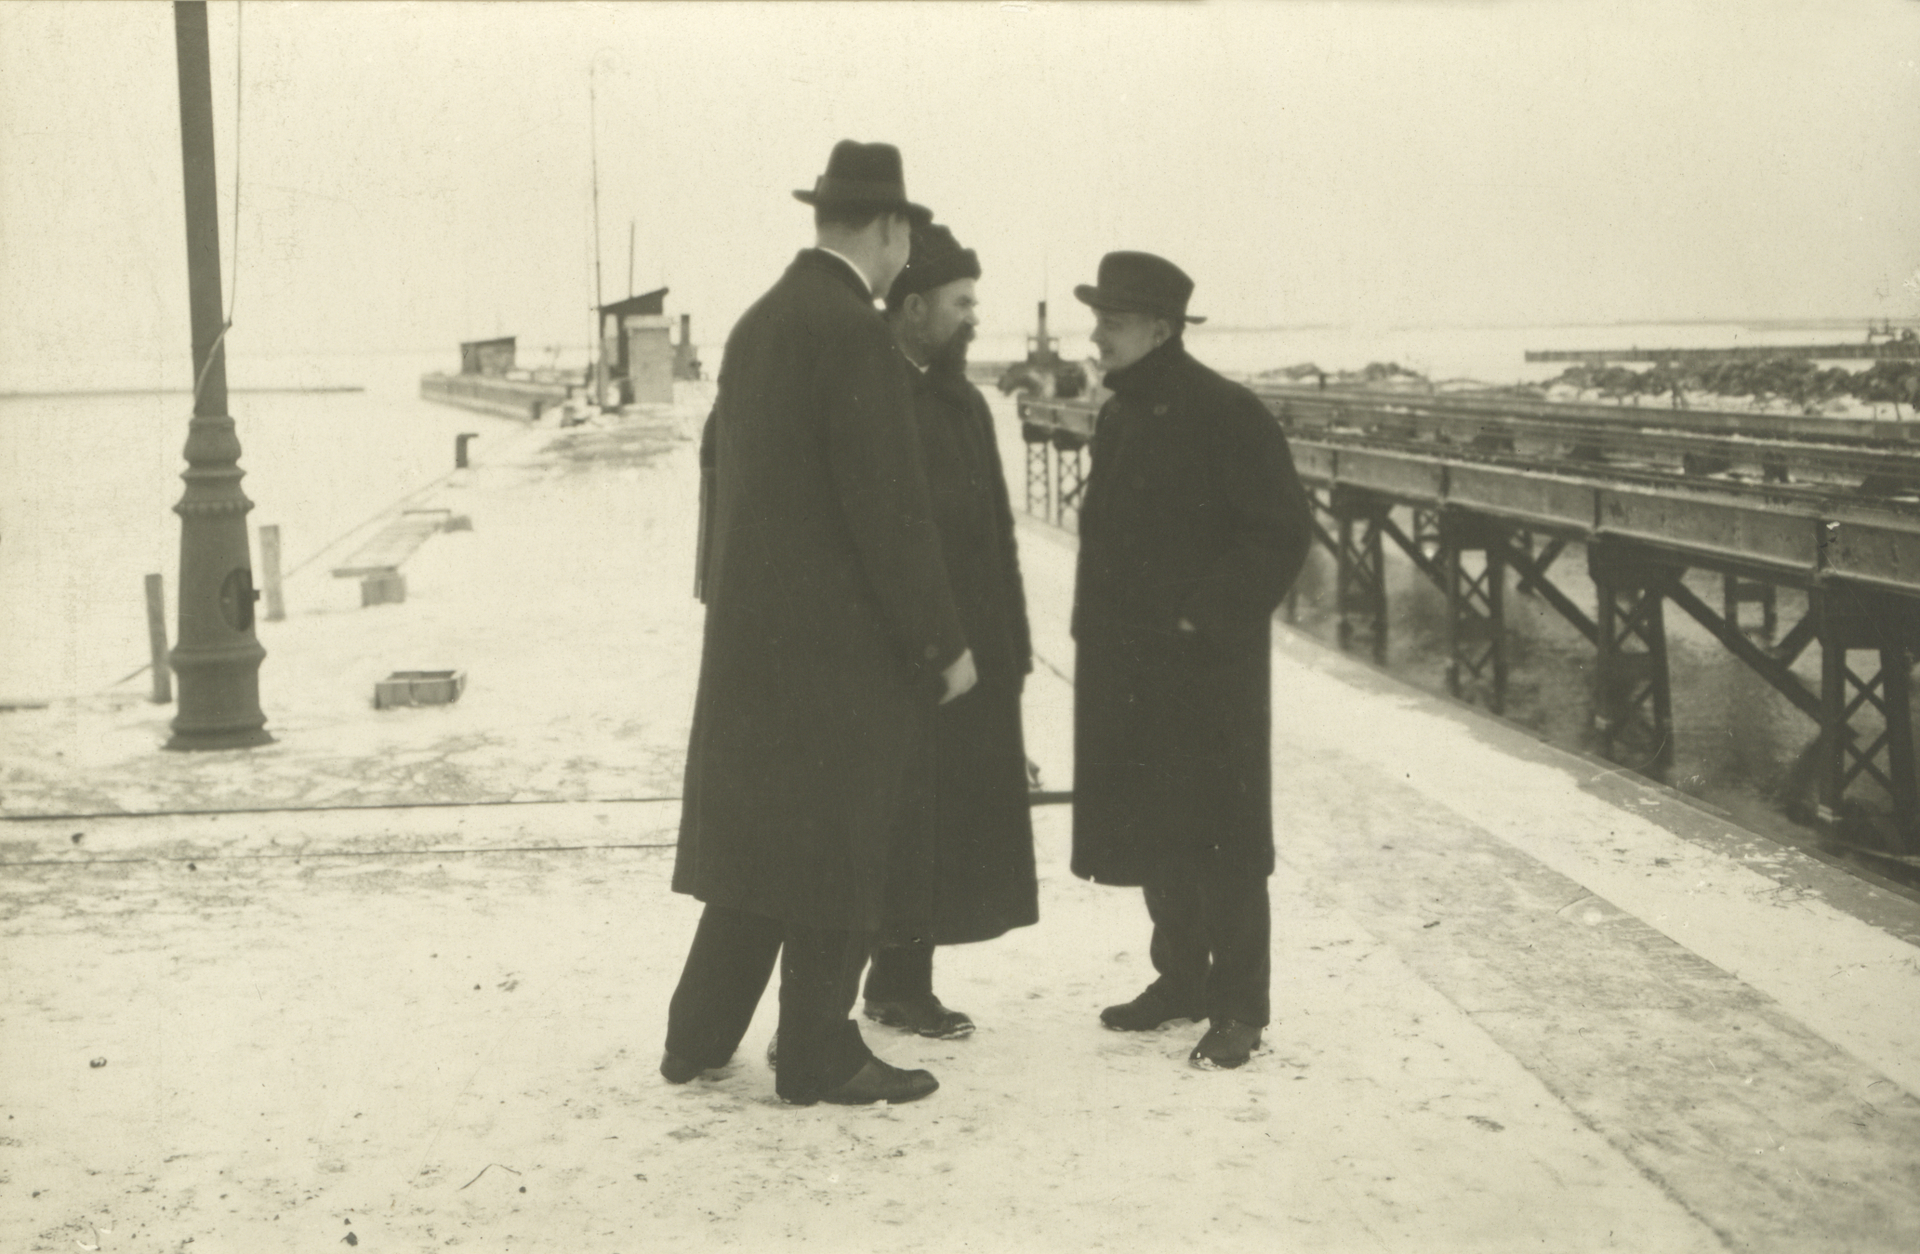 Konstantin Päts, J. Pitka, on the back of August Rei in the port of Tallinn